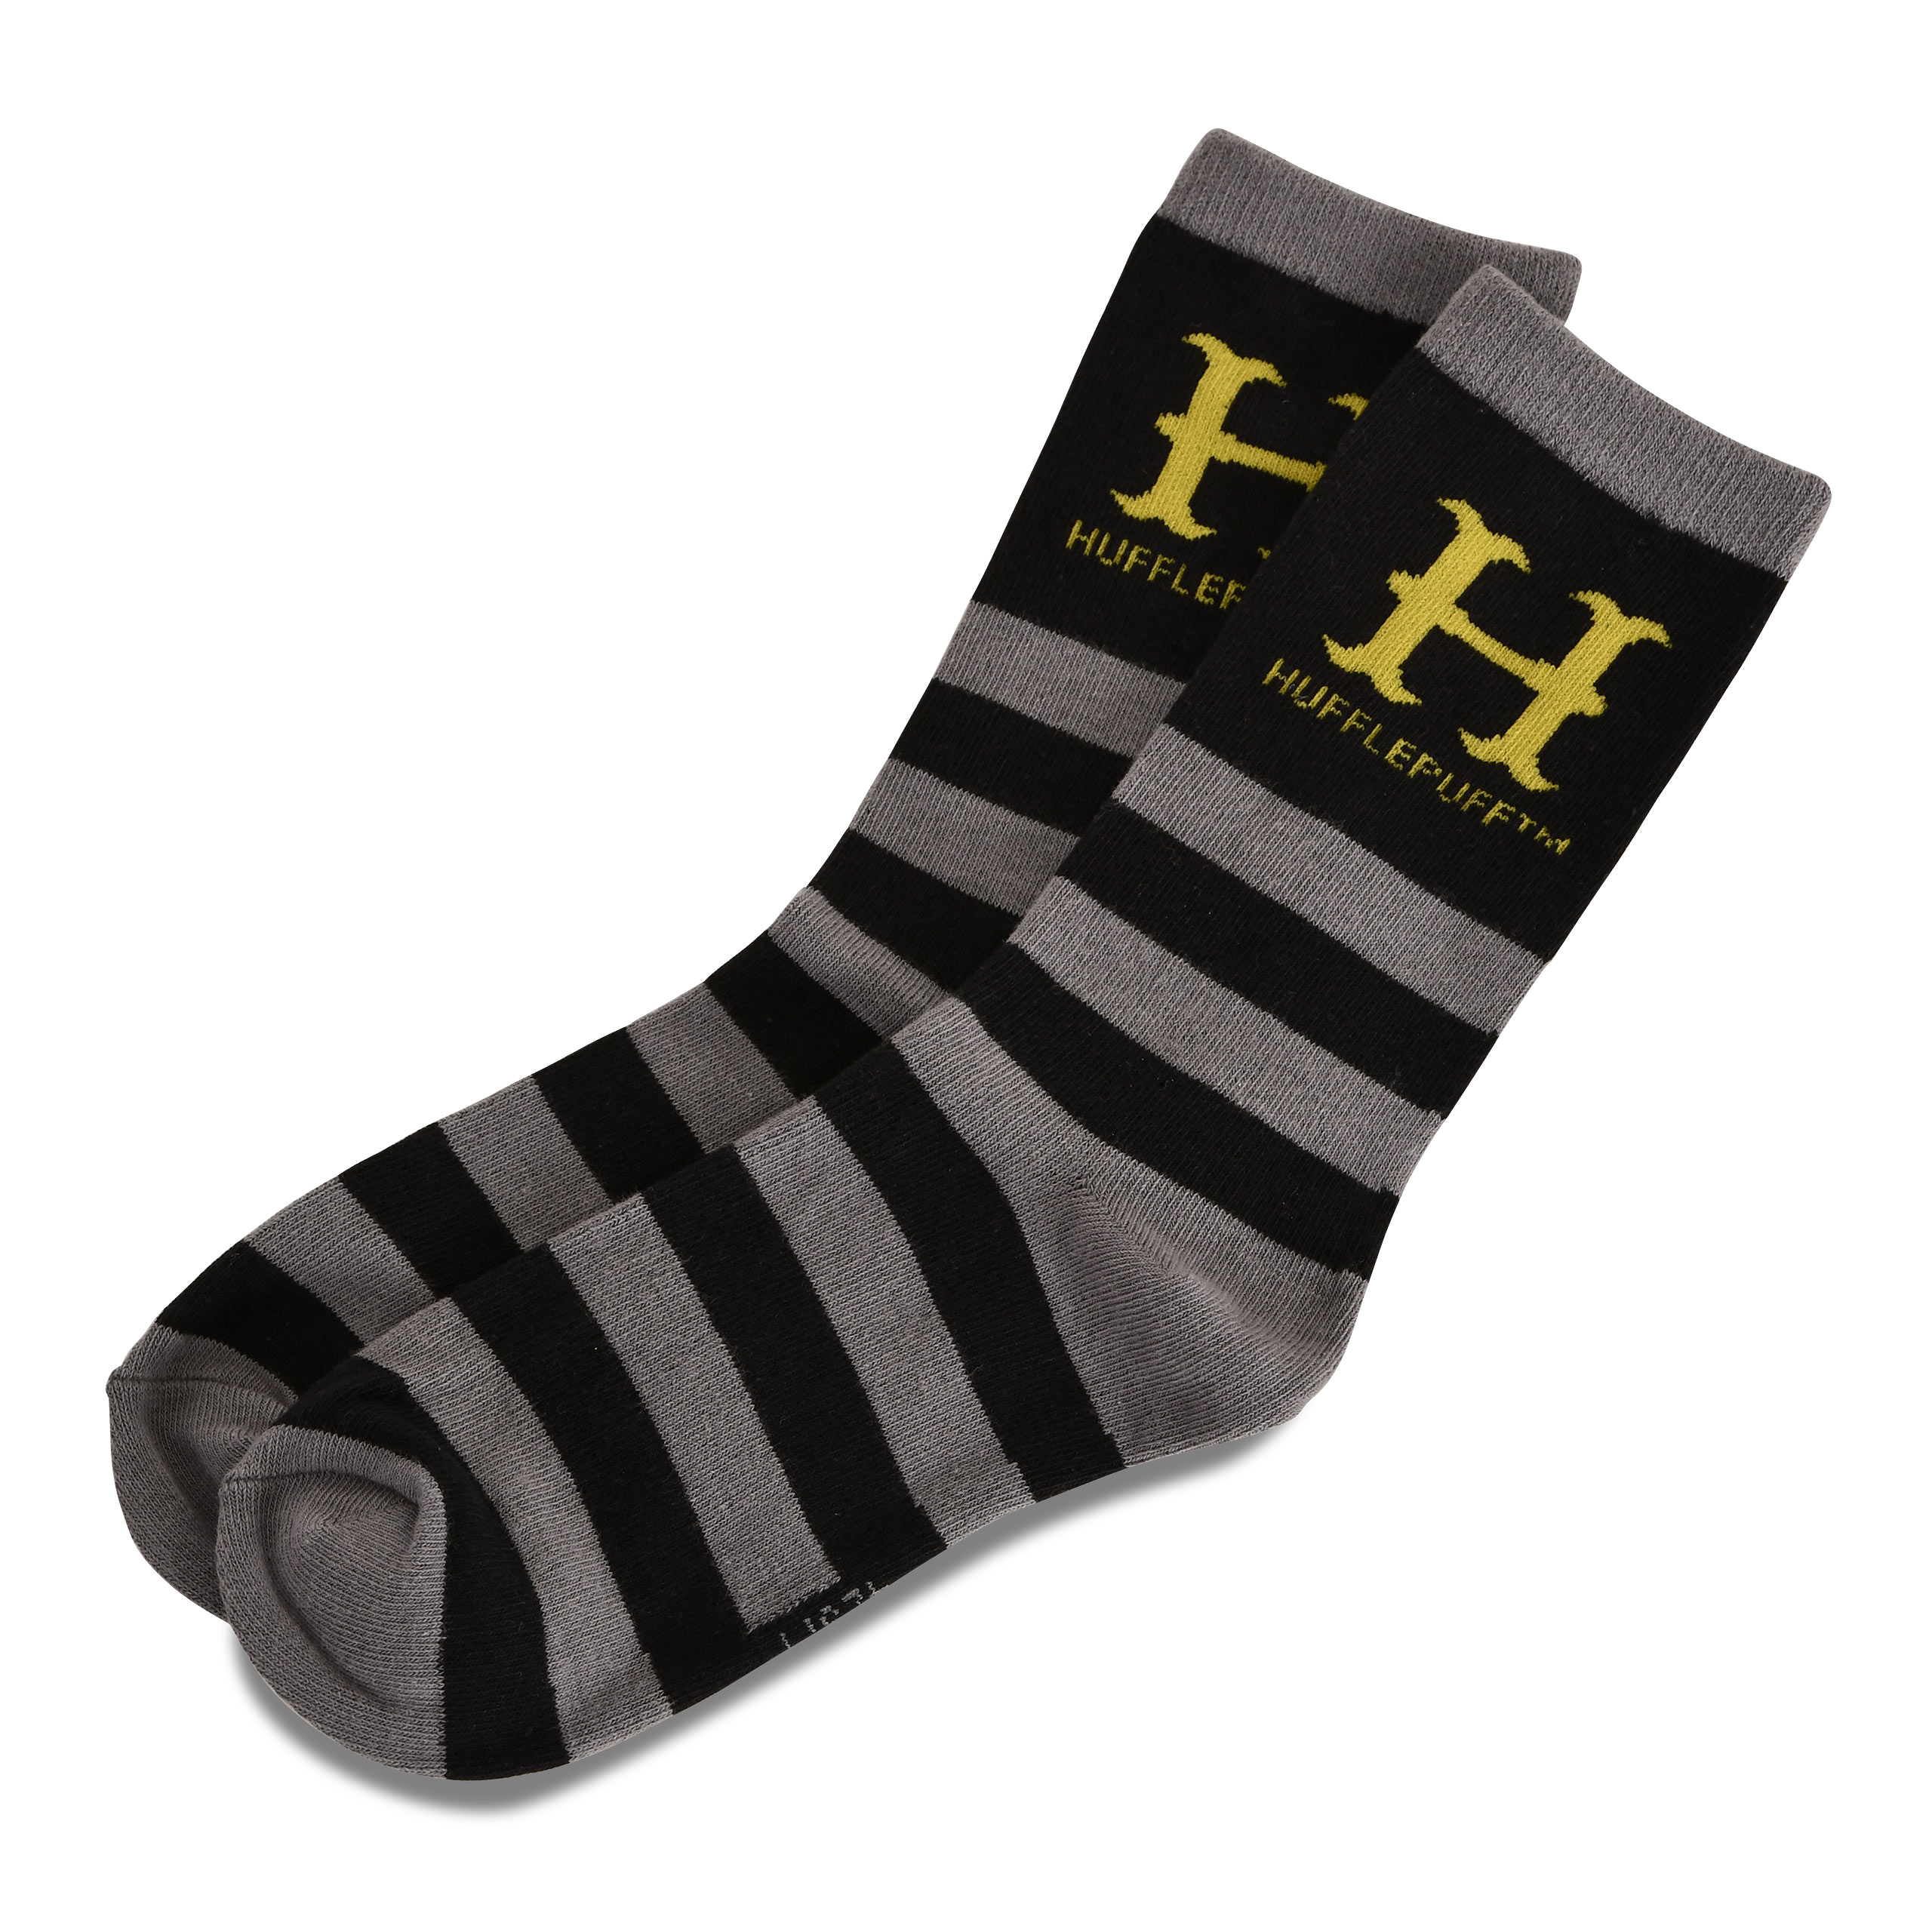 Harry Potter - Hufflepuff Socks Black-Grey